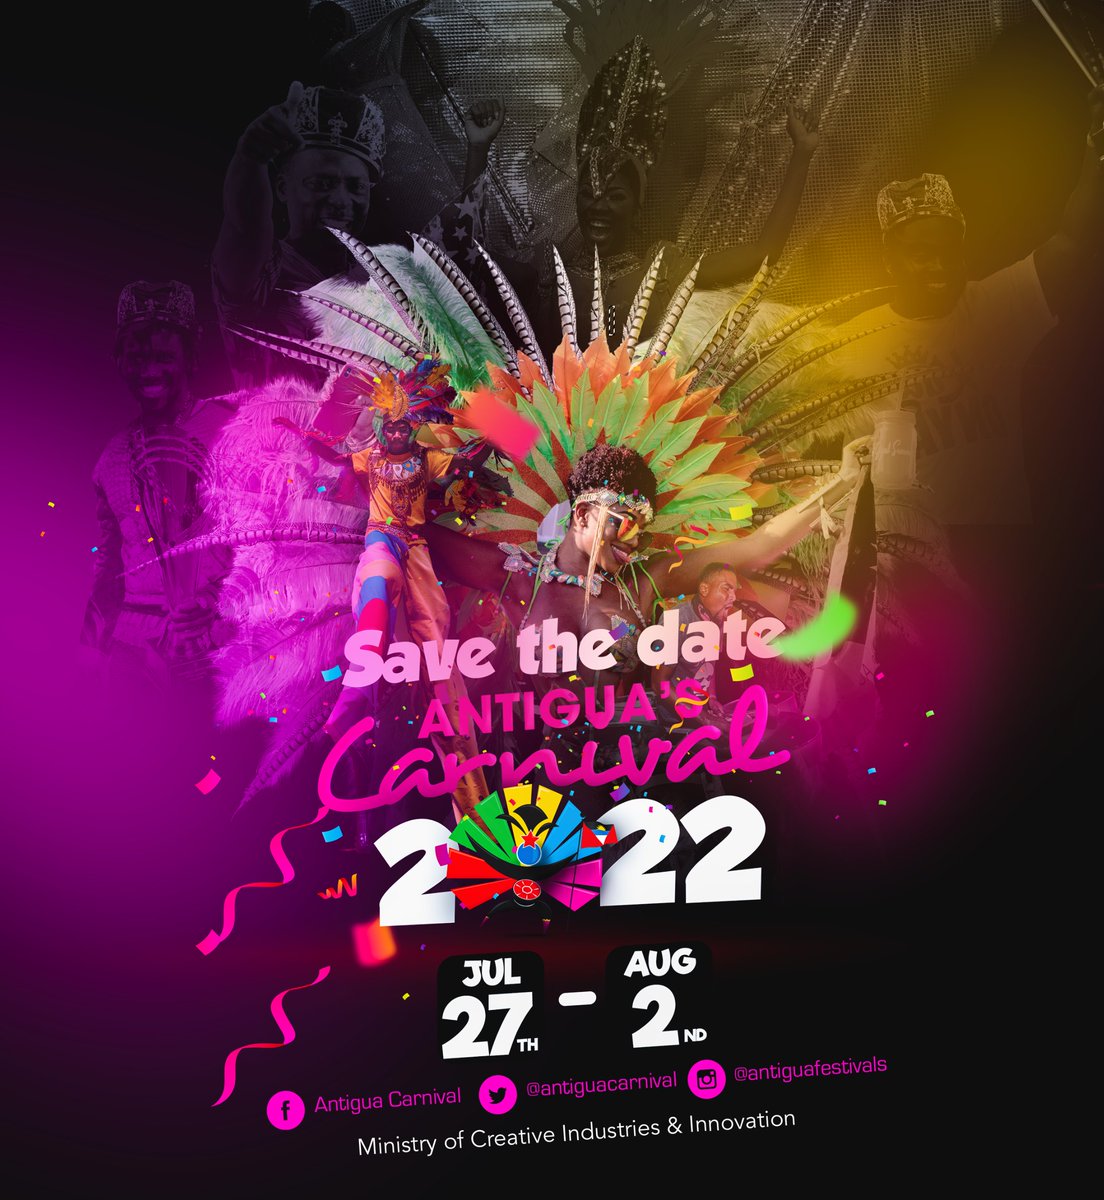 Experience Greatness - AGAIN 
Antigua's Carnival 2022 - July 27th to August 2nd
SAVE THE DATE 📍🇦🇬🎊🎉🎉🎉
#AntiguaFestivals #AntiguaCarnival #ExperienceGreatness #SaveTheDate #music #Mas #Soca #calypso #carnivaltabanca #antiguaandbarbuda #Carnival #culture